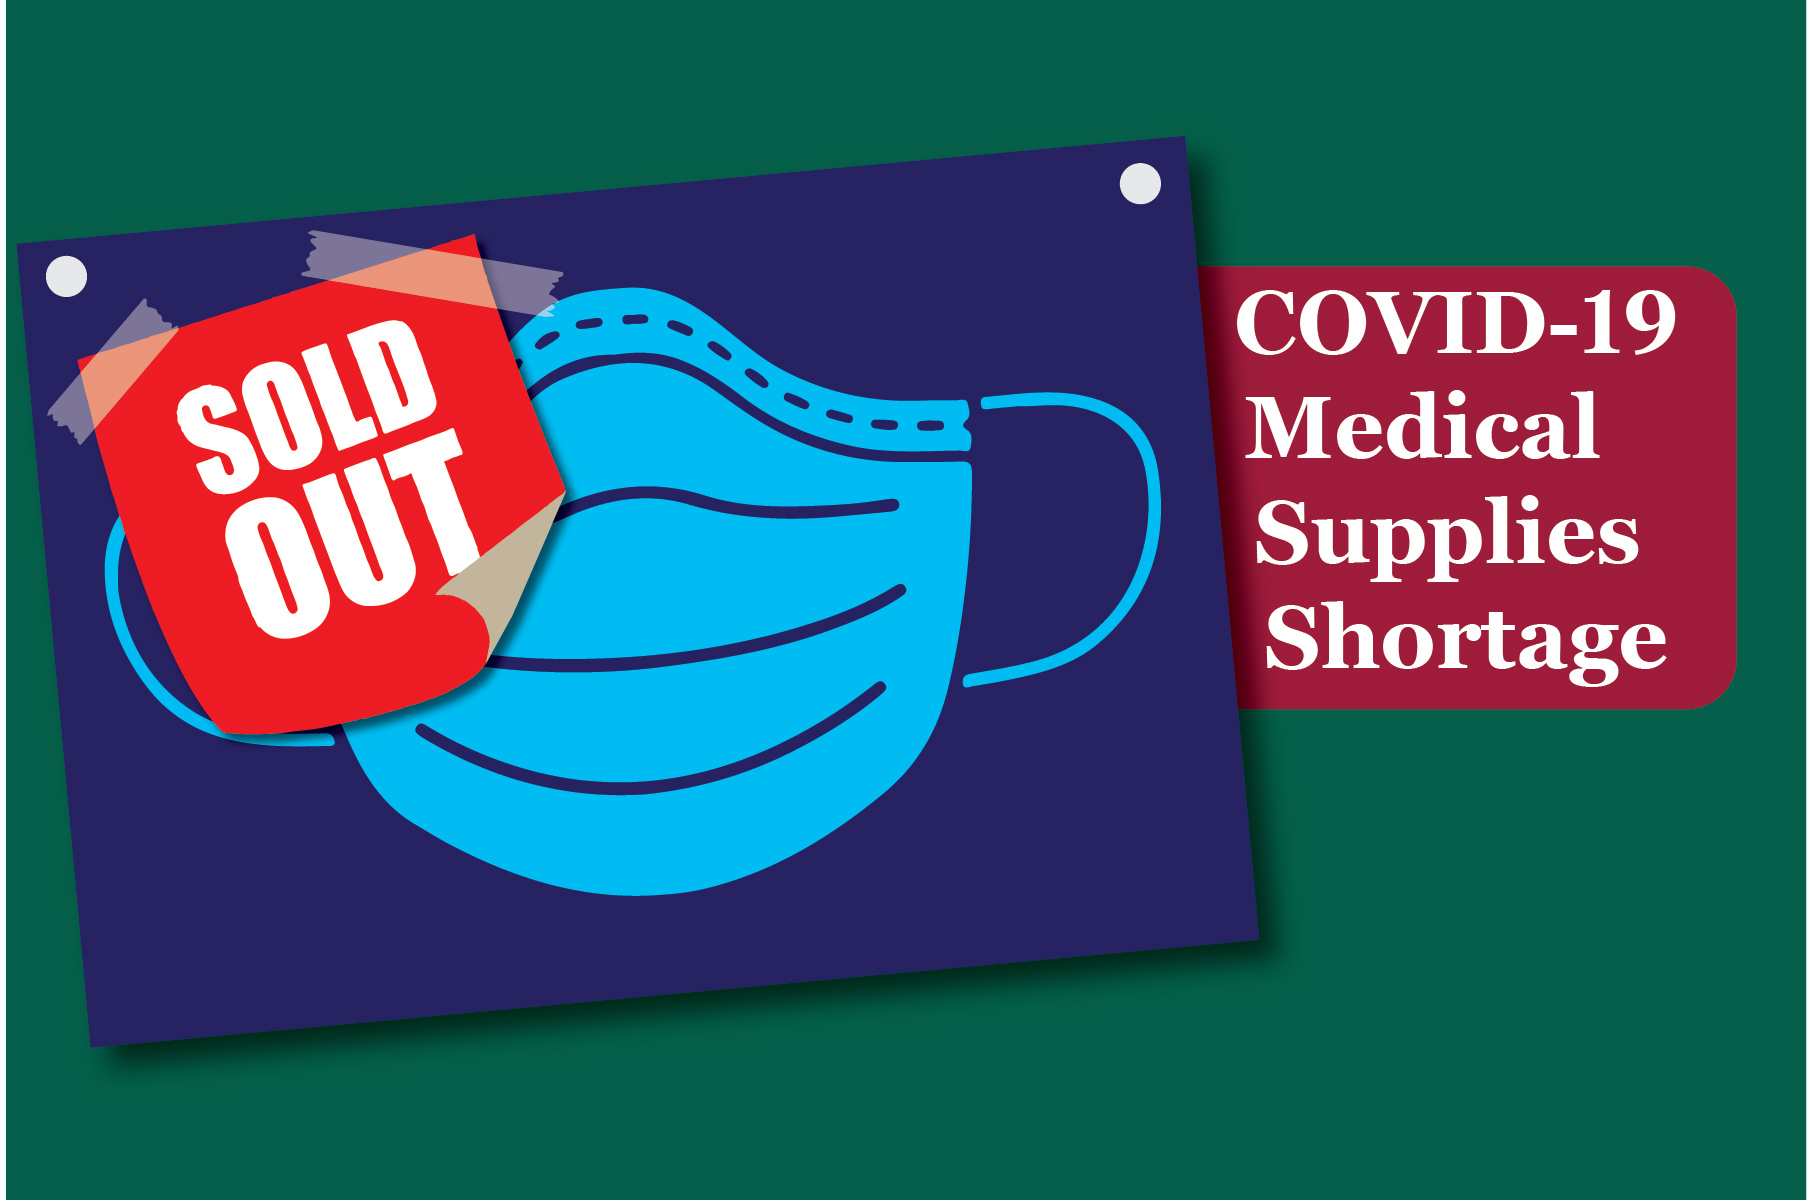 COVID-19 Medical Supplies Shortage